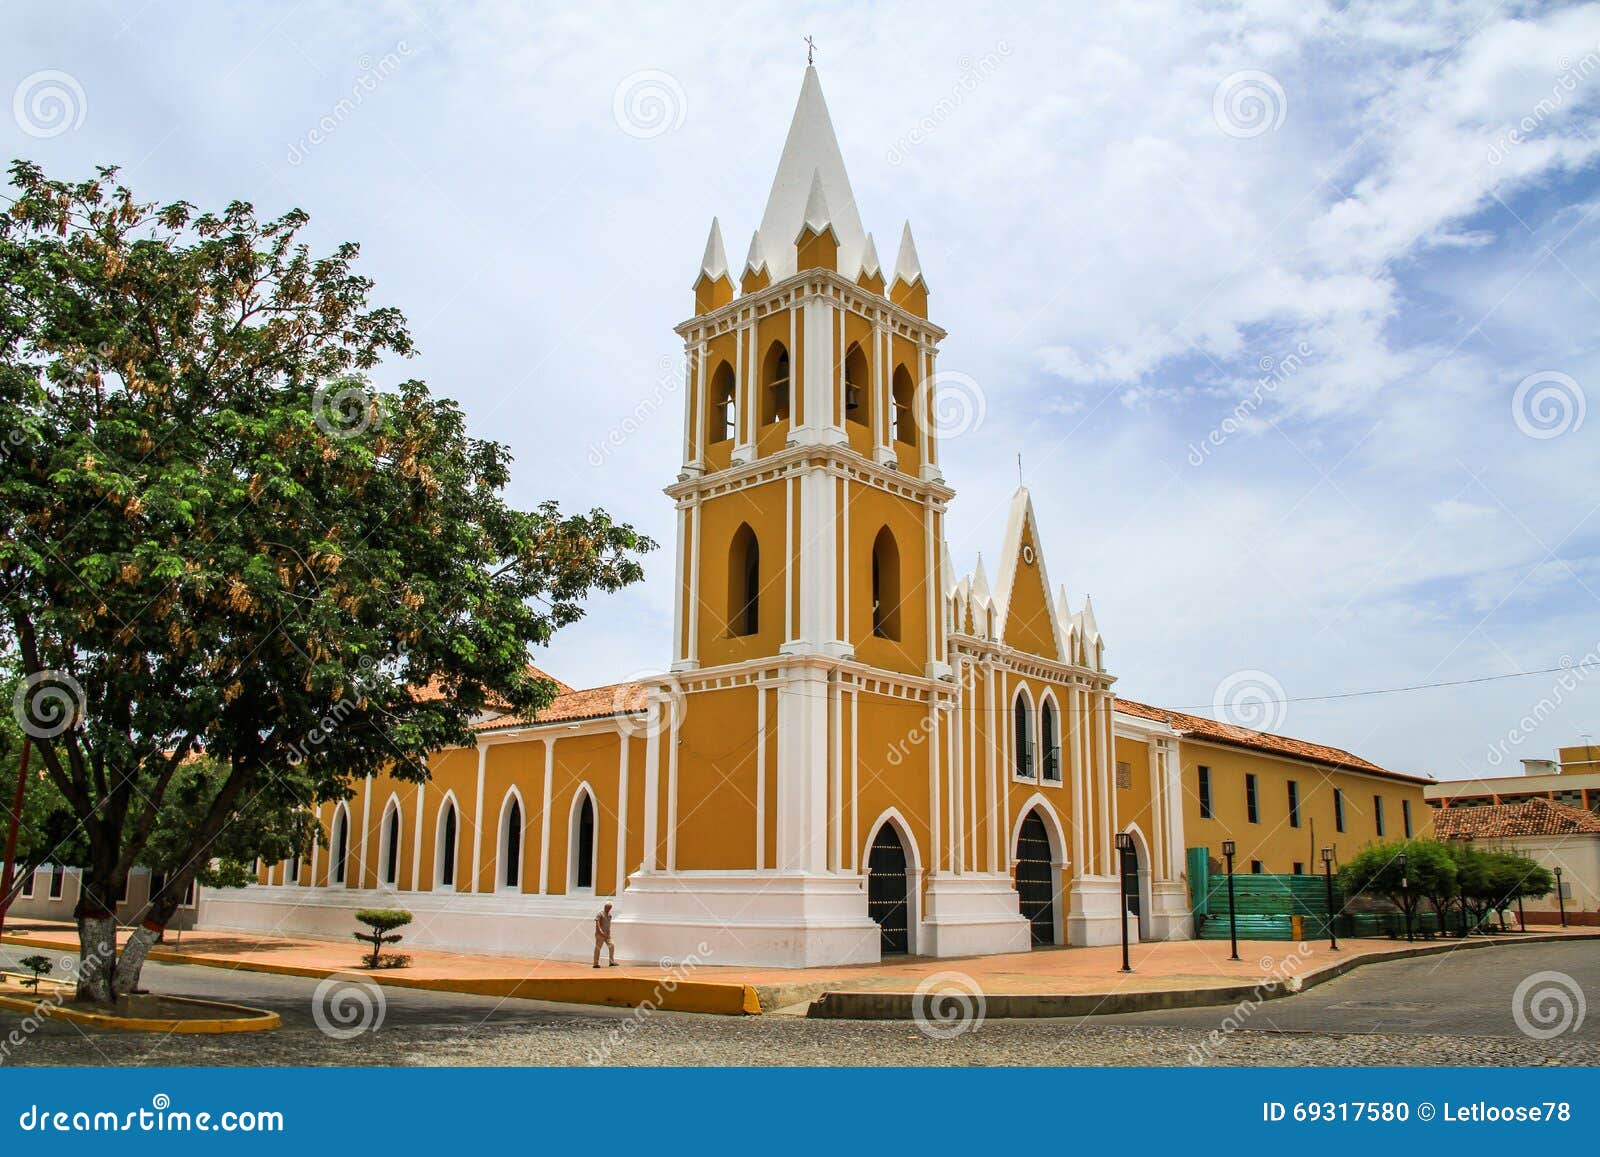 san francisco church, coro, venezuela